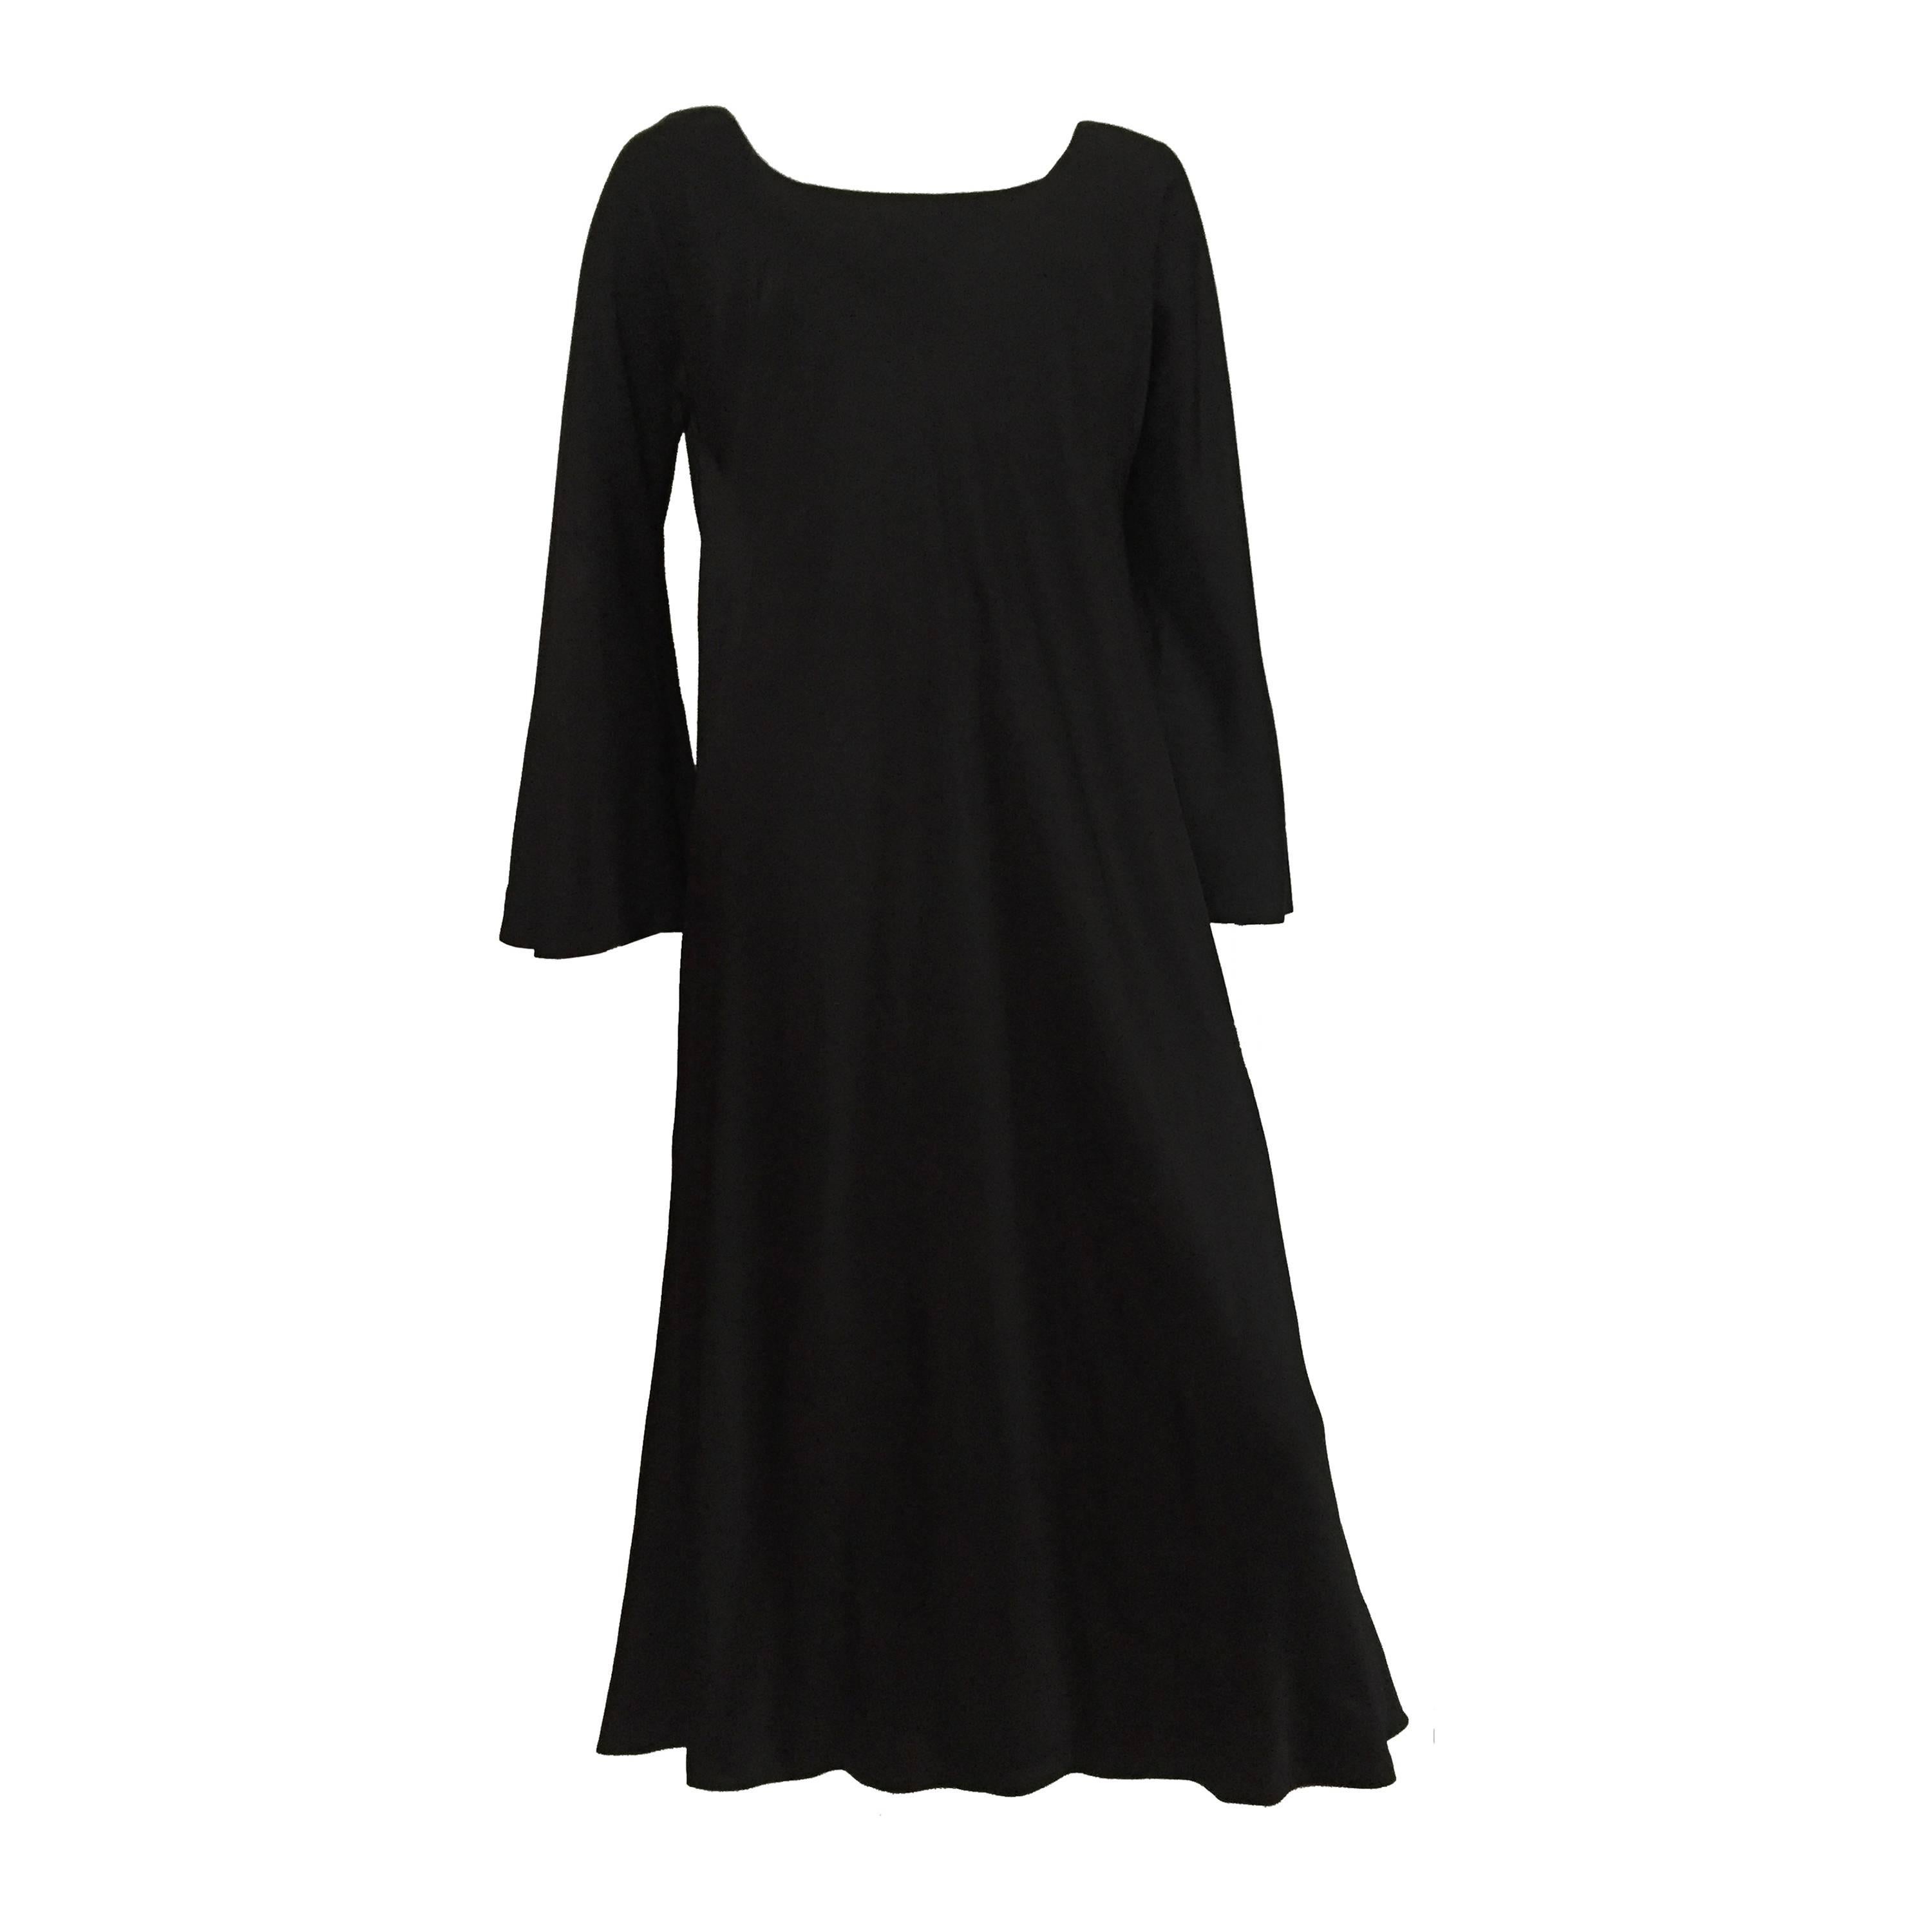 Pauline Trigere 80s black evening dress size 12 / 14. For Sale